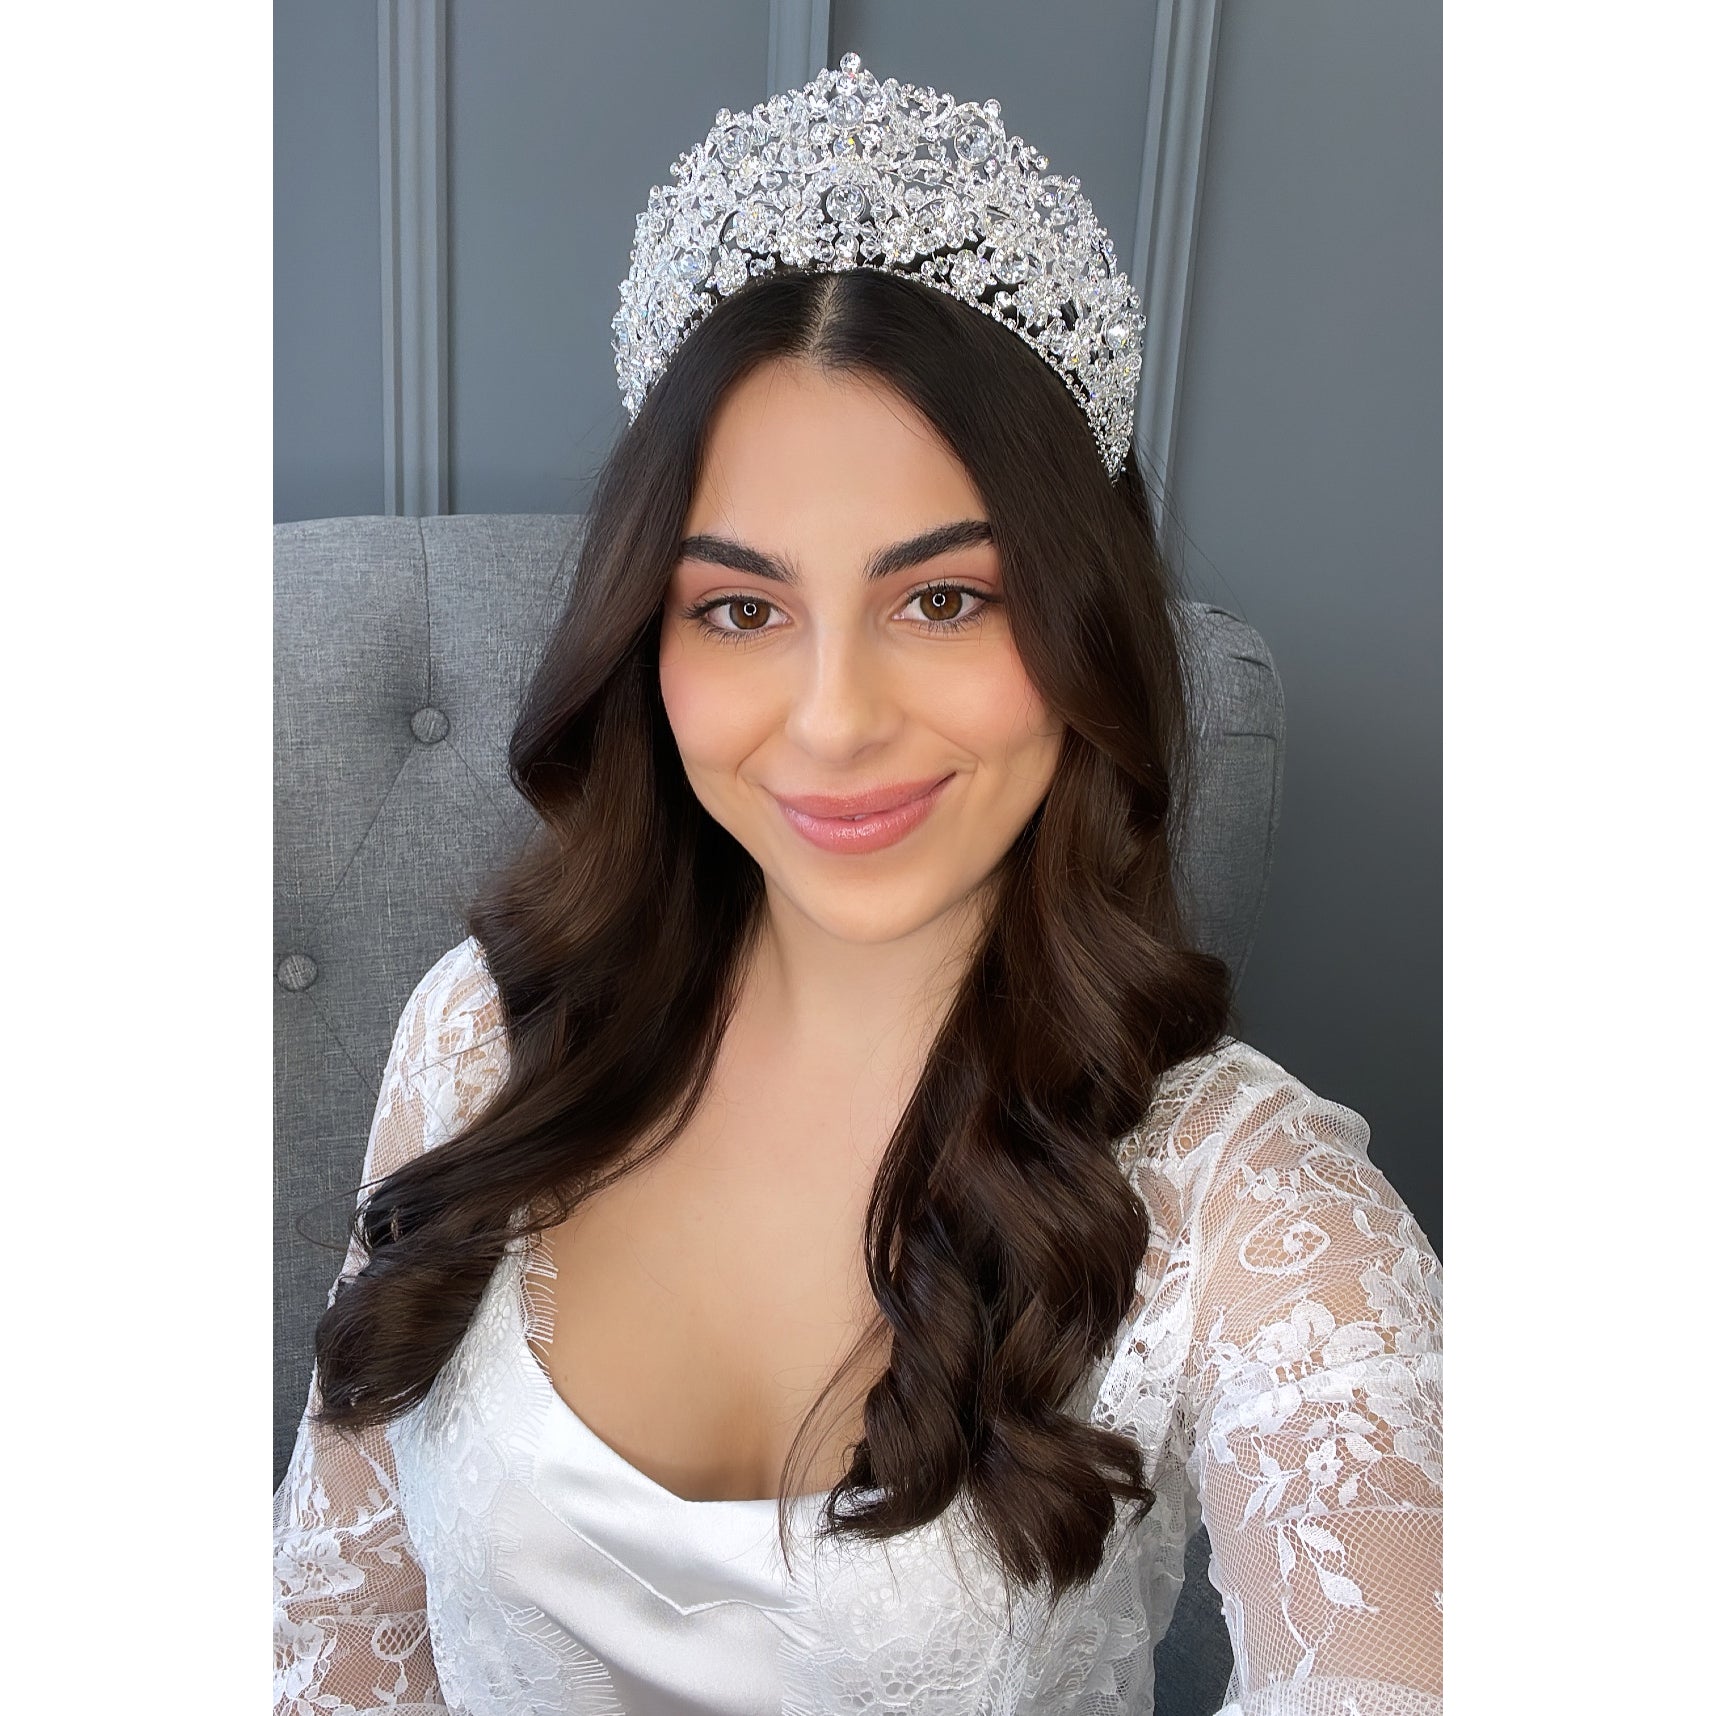 Ayah Bridal Crown Hair Accessories - Tiara & Crown    